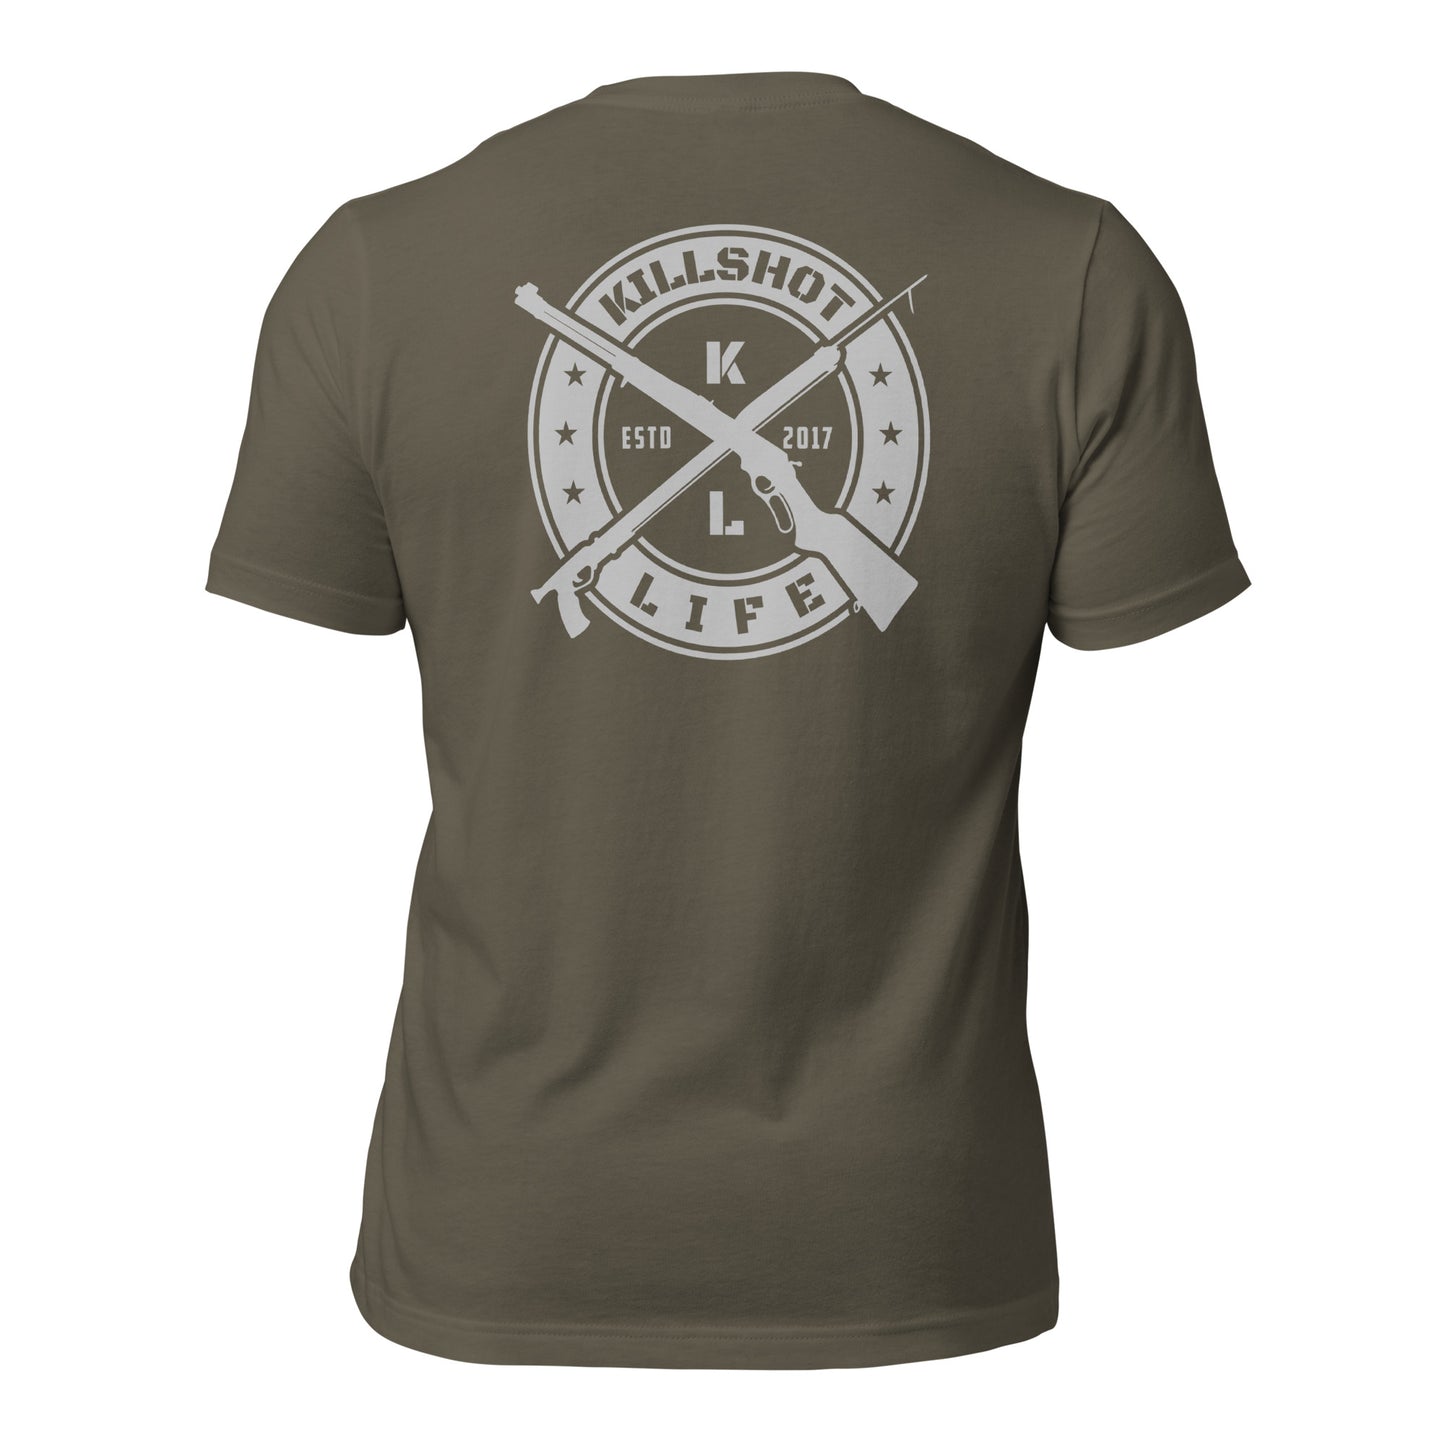 Shot Not Bought Unisex T-Shirt - Antler Crest (Silver Print)